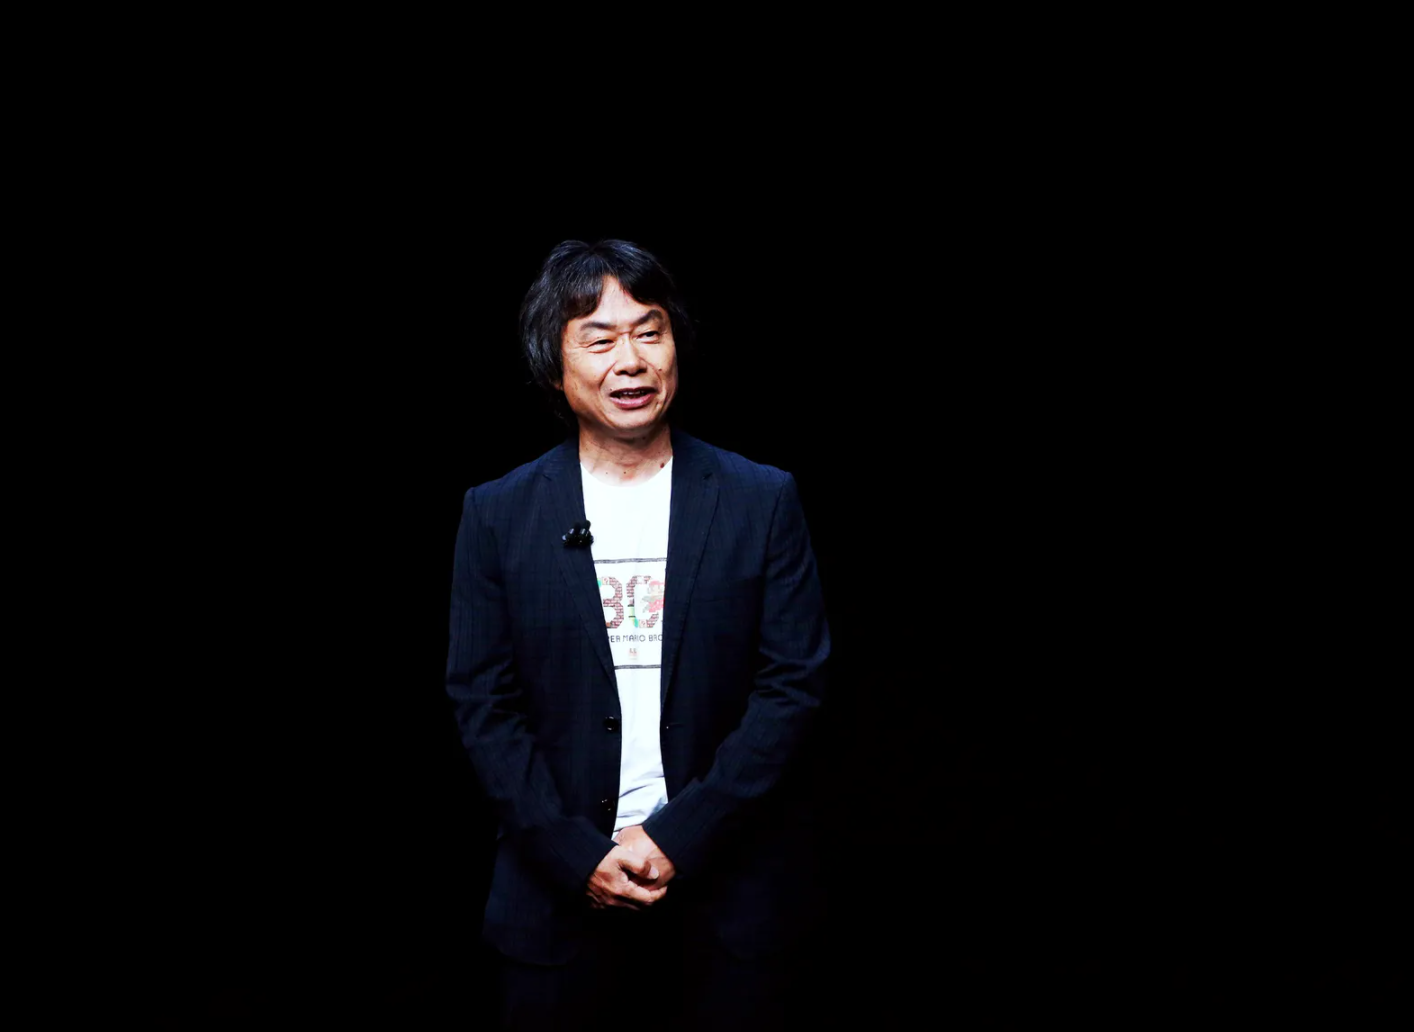 Shigeru Miyamoto of Nintendo Expands His Empire - The New York Times